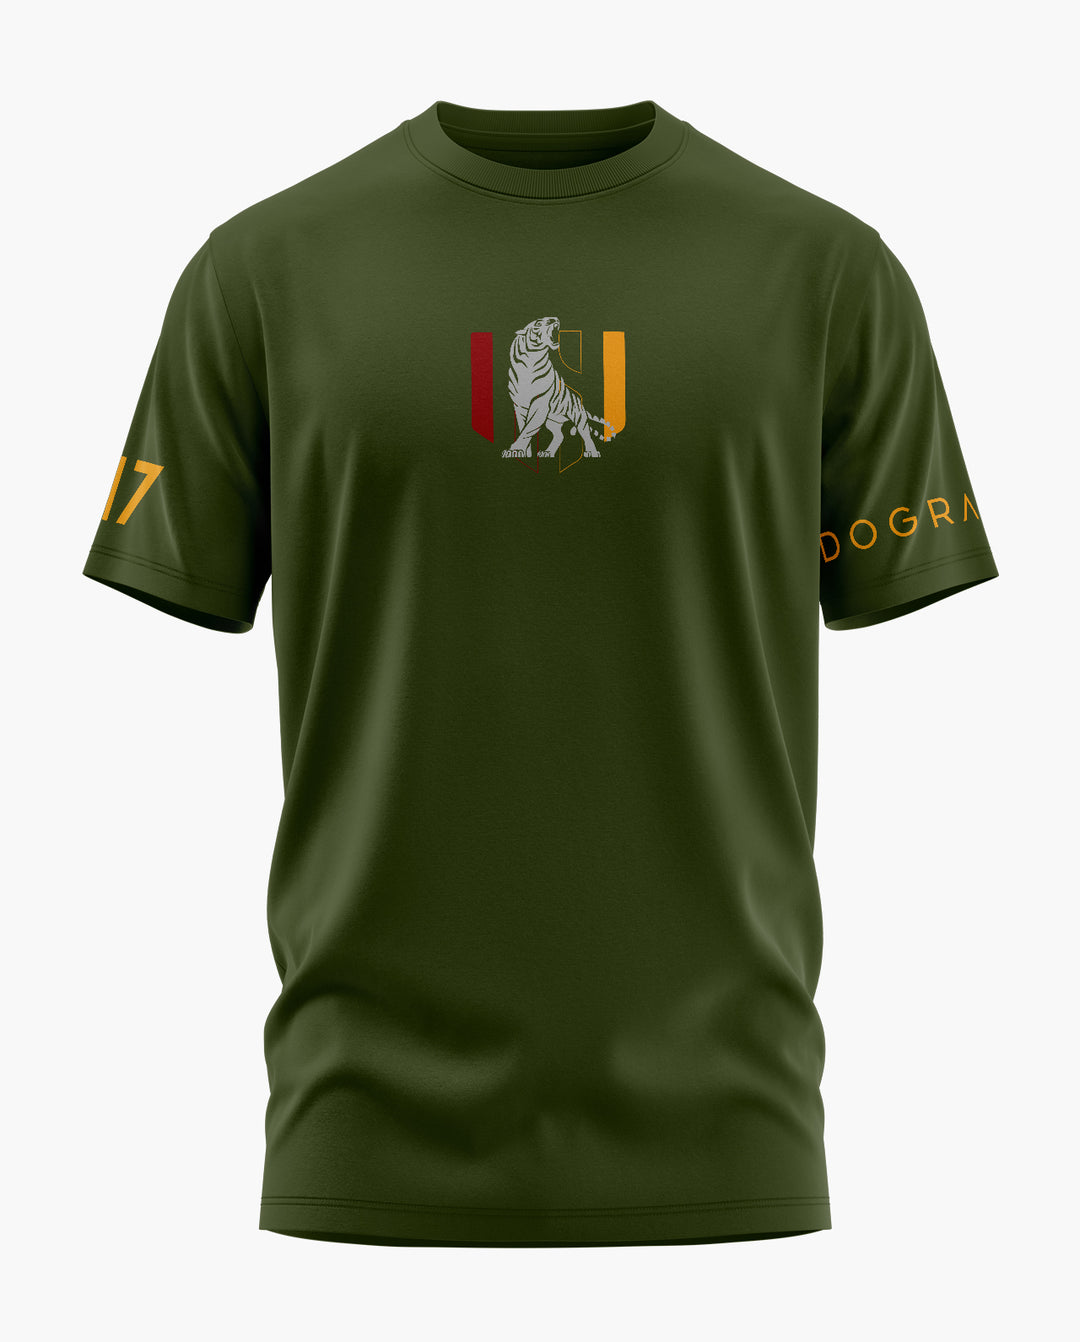 17TH DOGRA REGIMENT T-Shirt